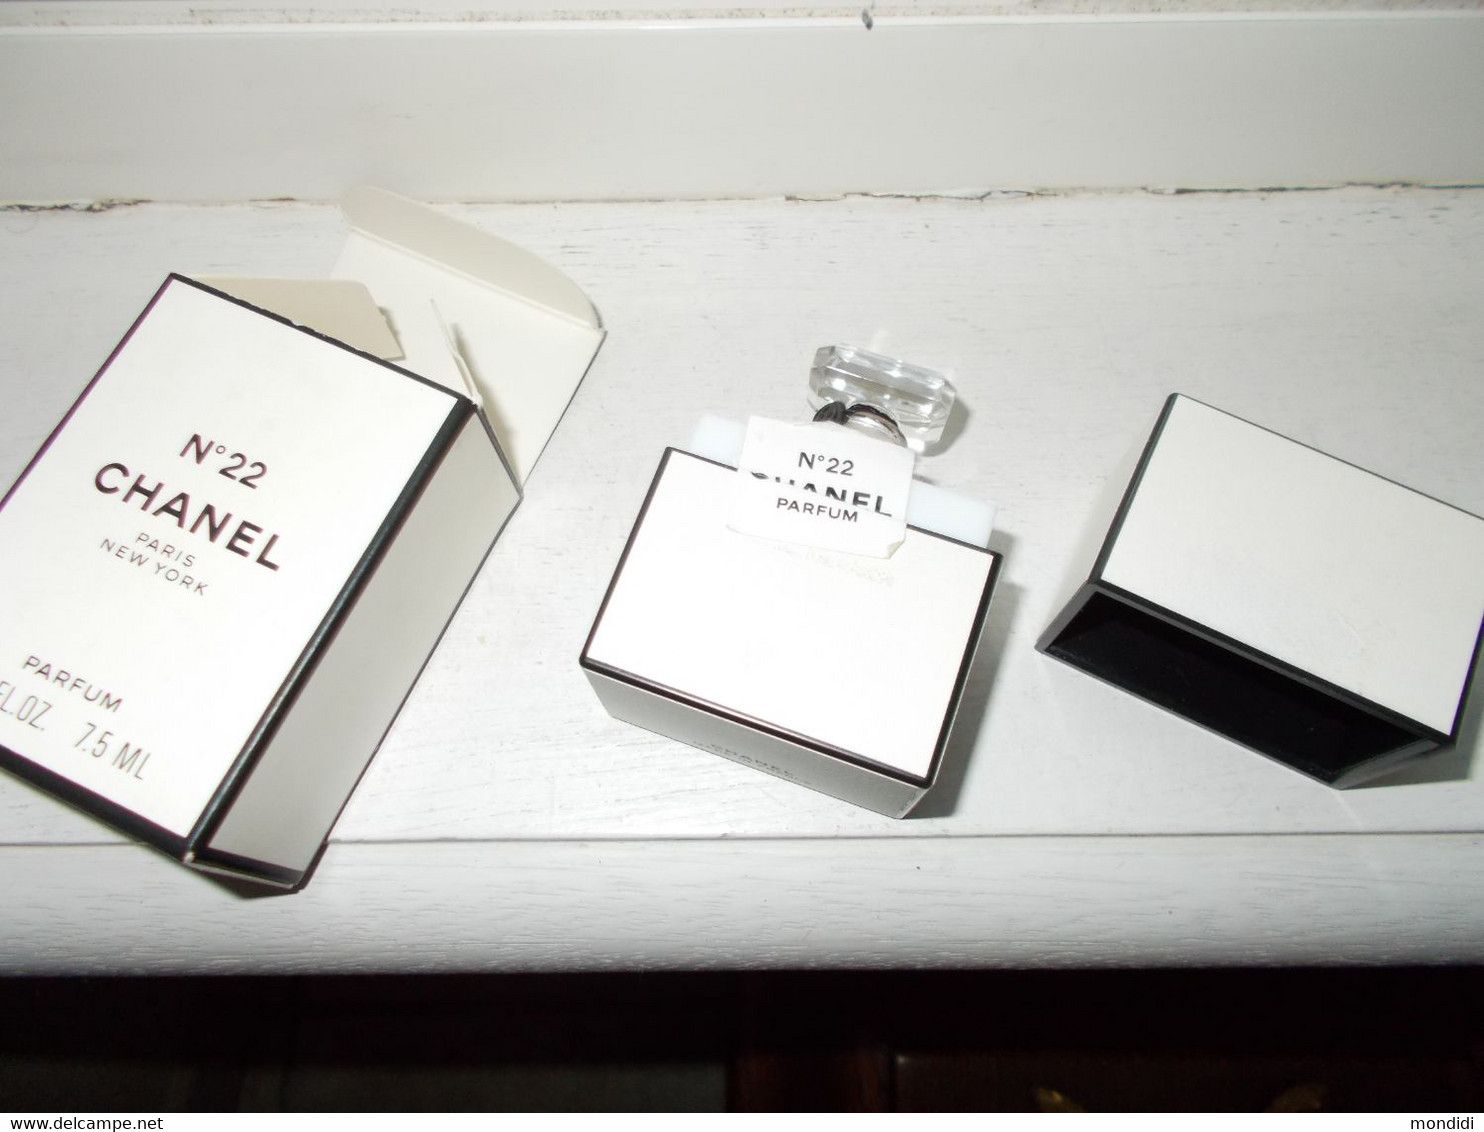 ancien flacon miniature parfum n° 22  chanel paris 7,5 ml scellé boite origine